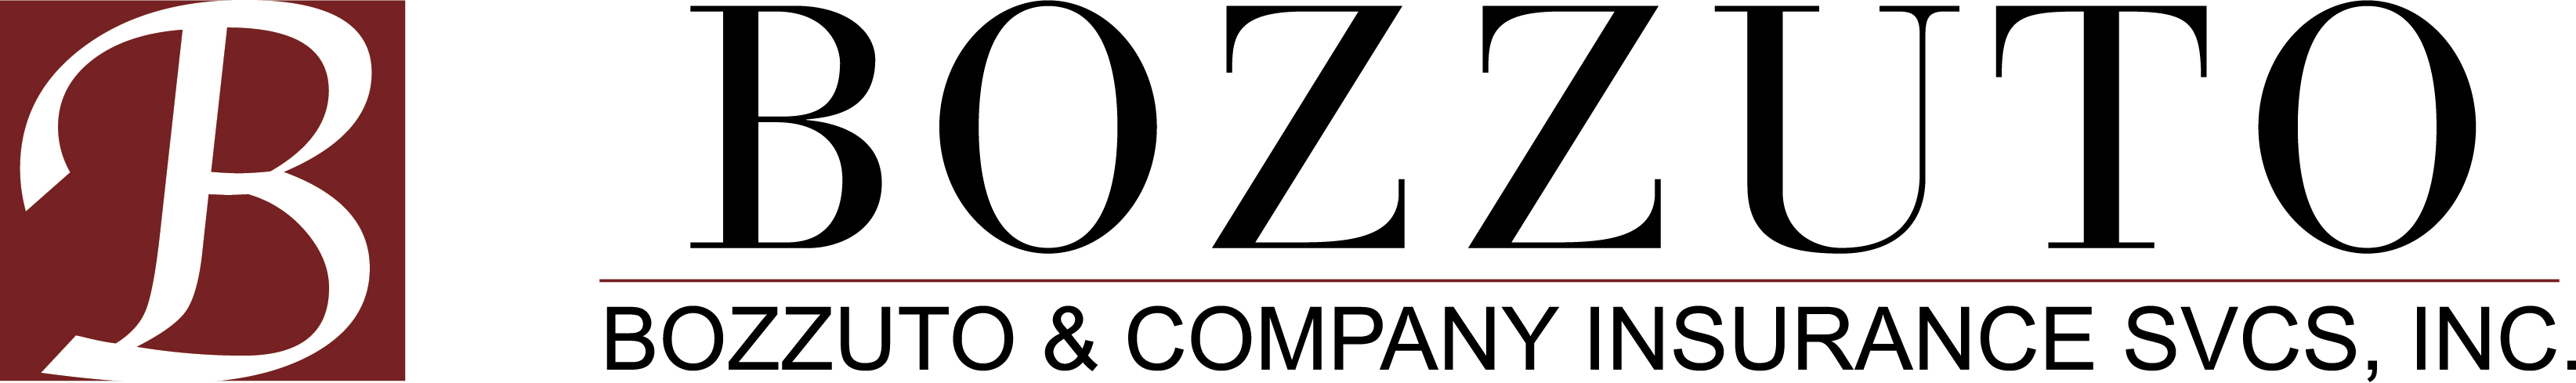 Bozzuto & Company Insurance Services Inc